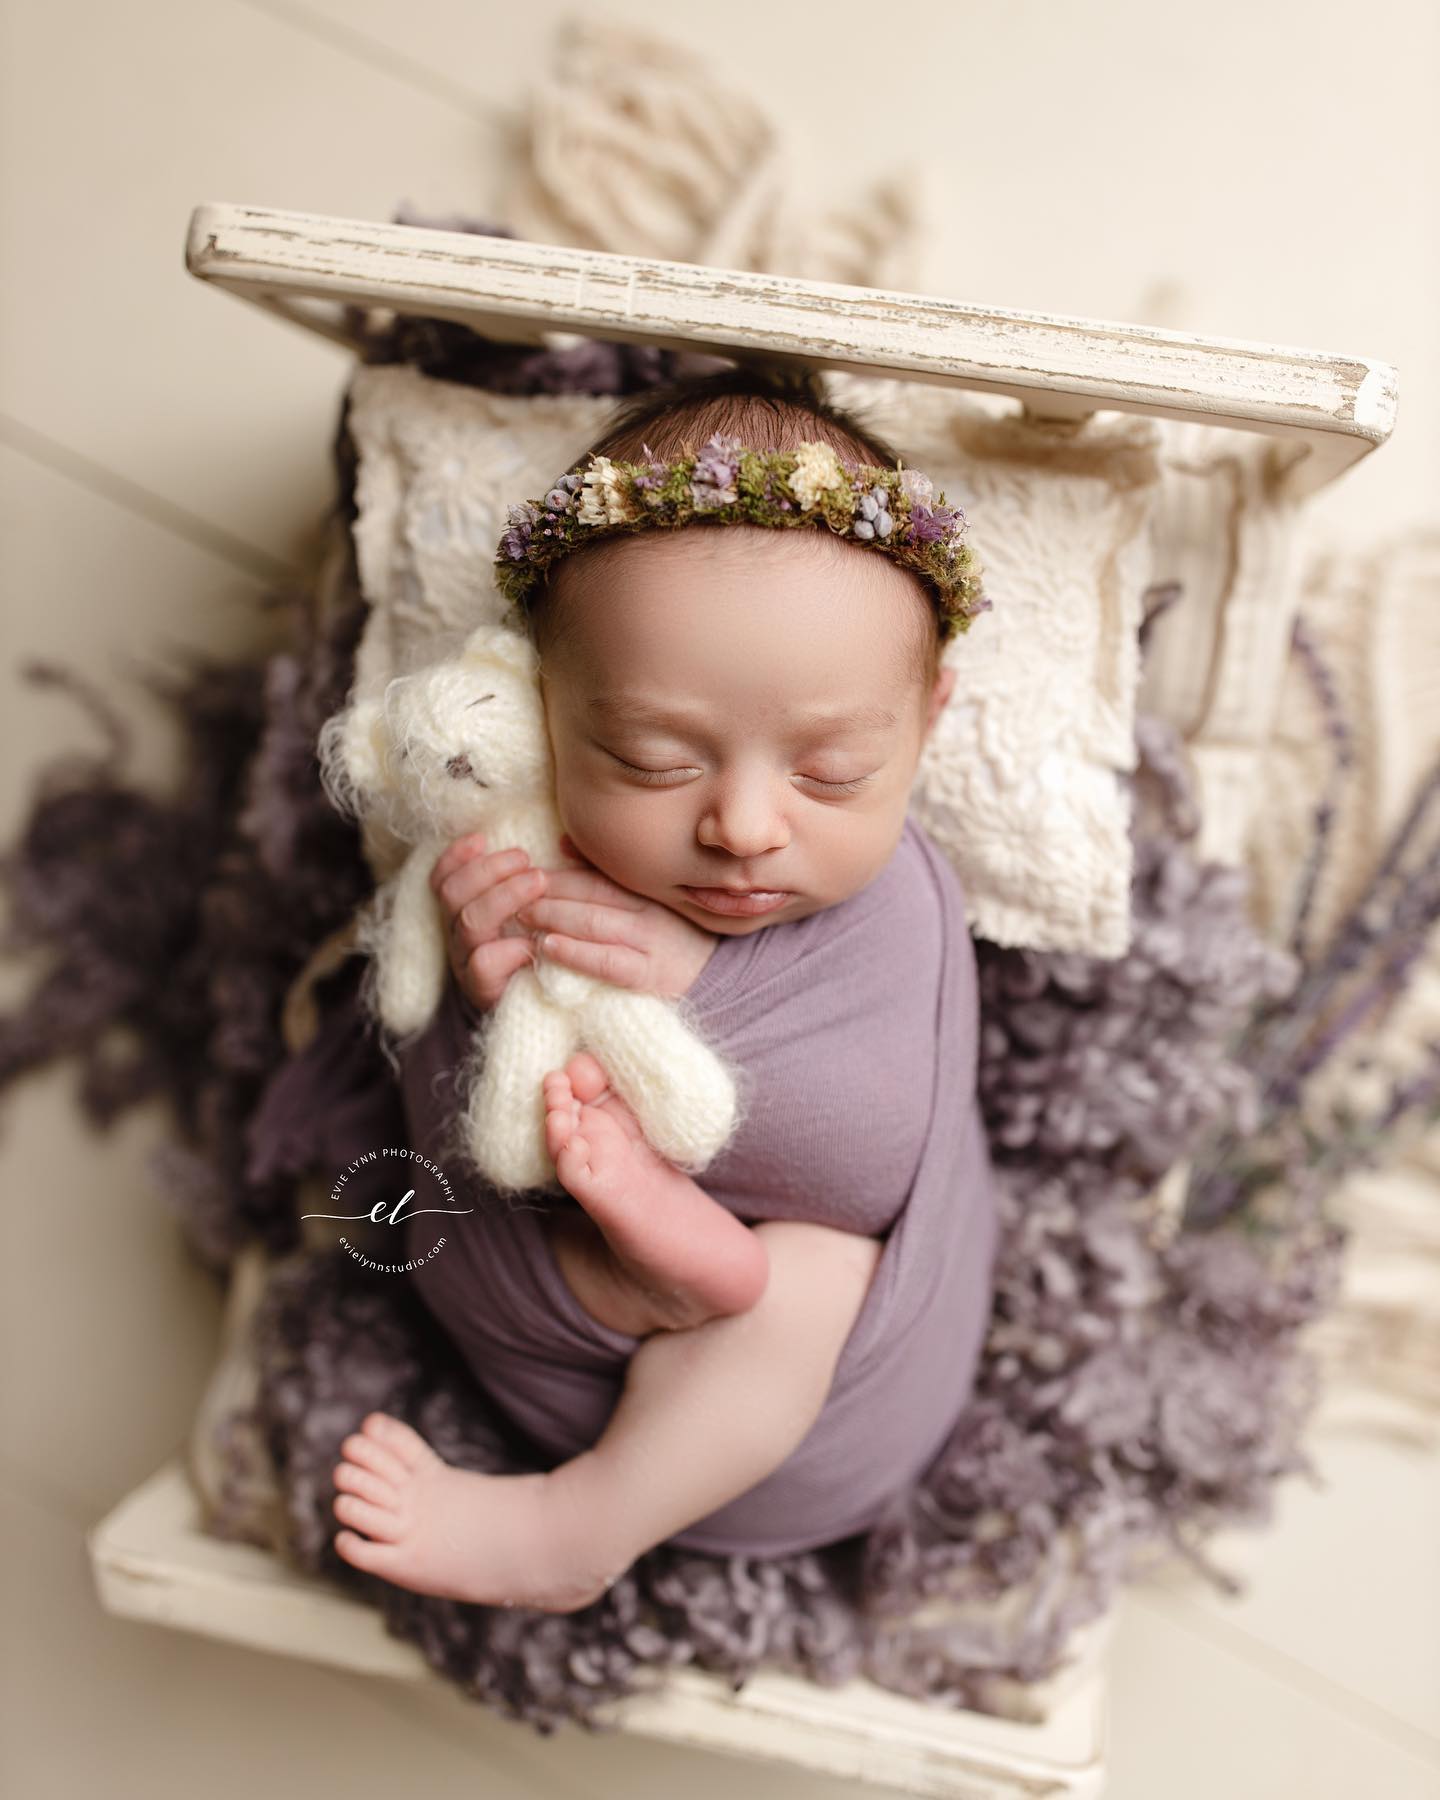 Meet Nashville Newborn Photographer, Evie Lynn Photography | Nashville Baby Guide